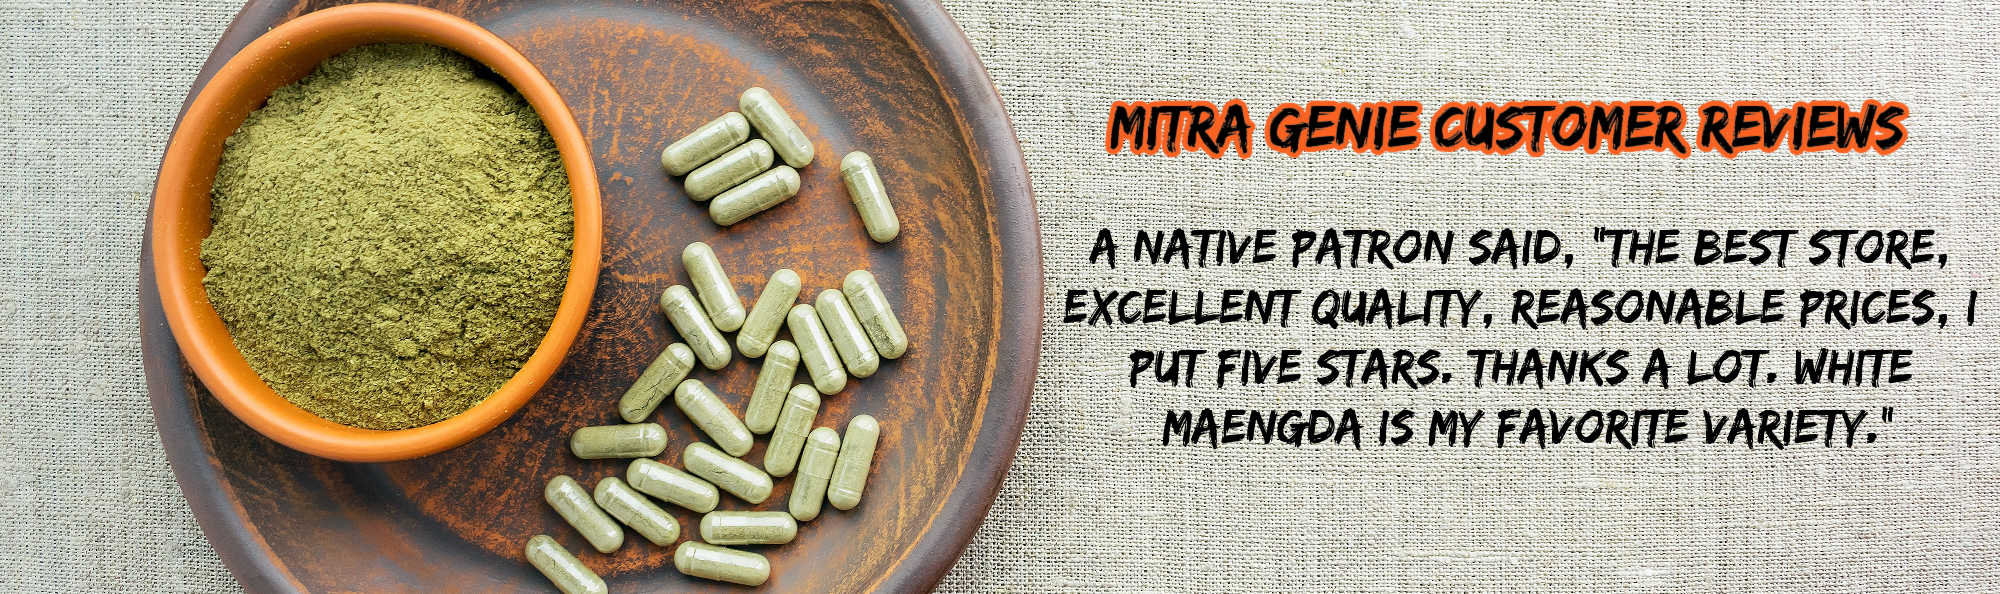 image of mitra genie customer reviews